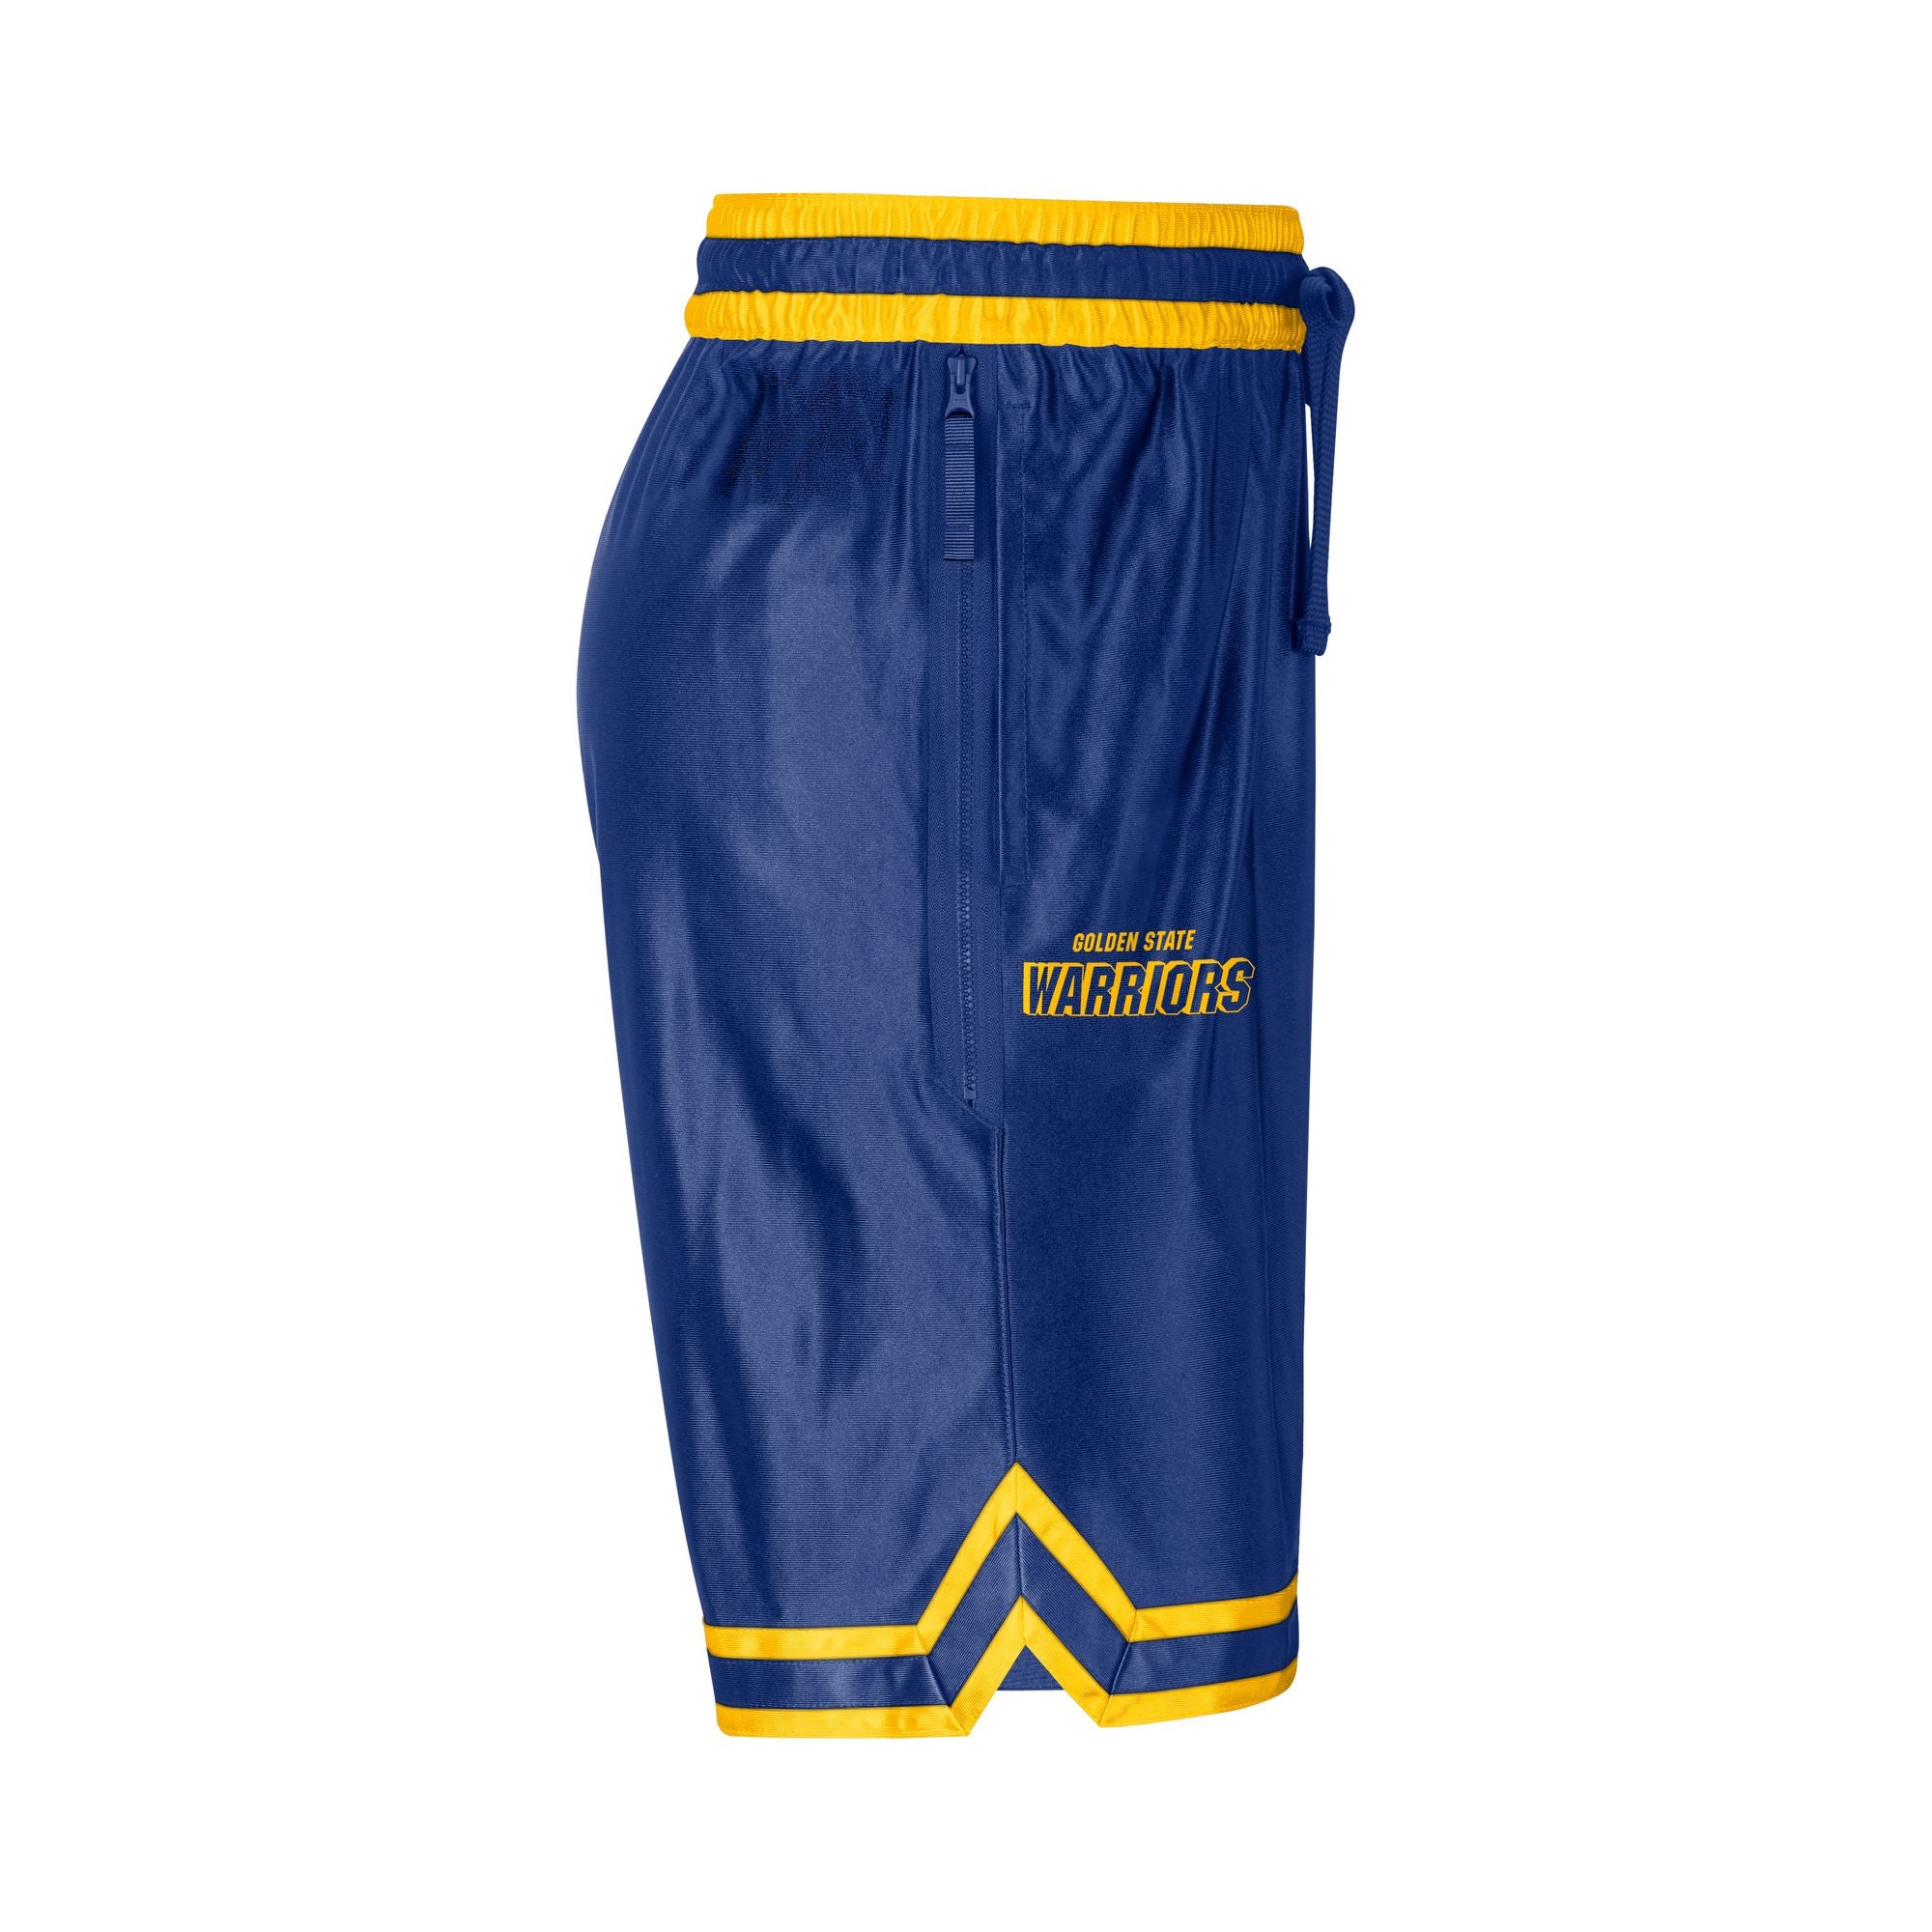 Mens Golden State Warriors Dri-Fit Shorts